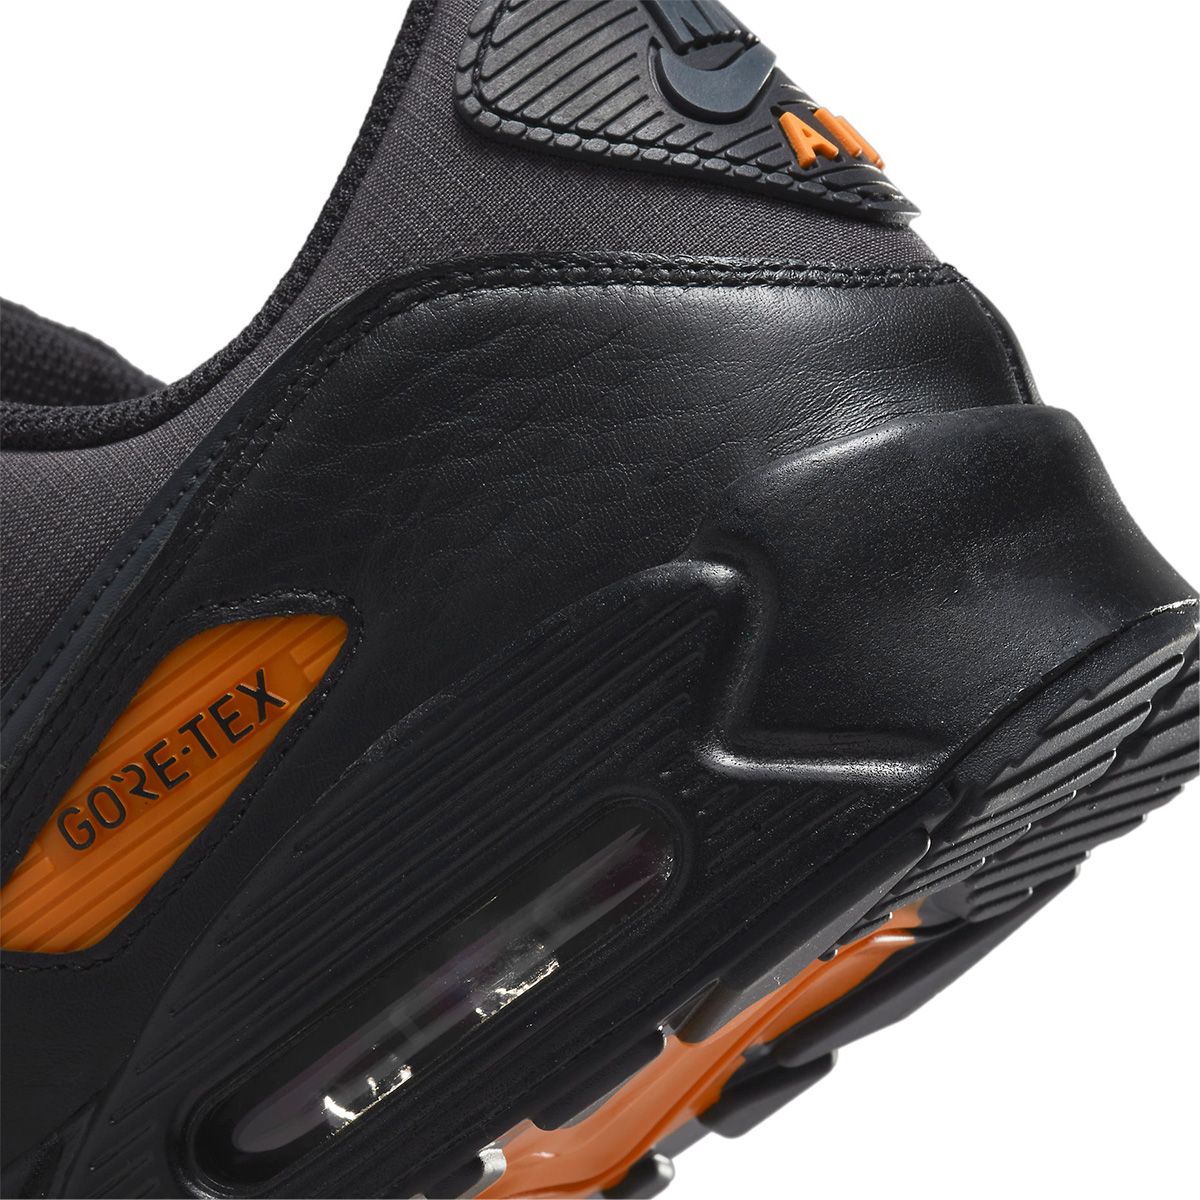 Nike Air Max 90 GORE-TEX Appears in Black and Orange | LaptrinhX / News